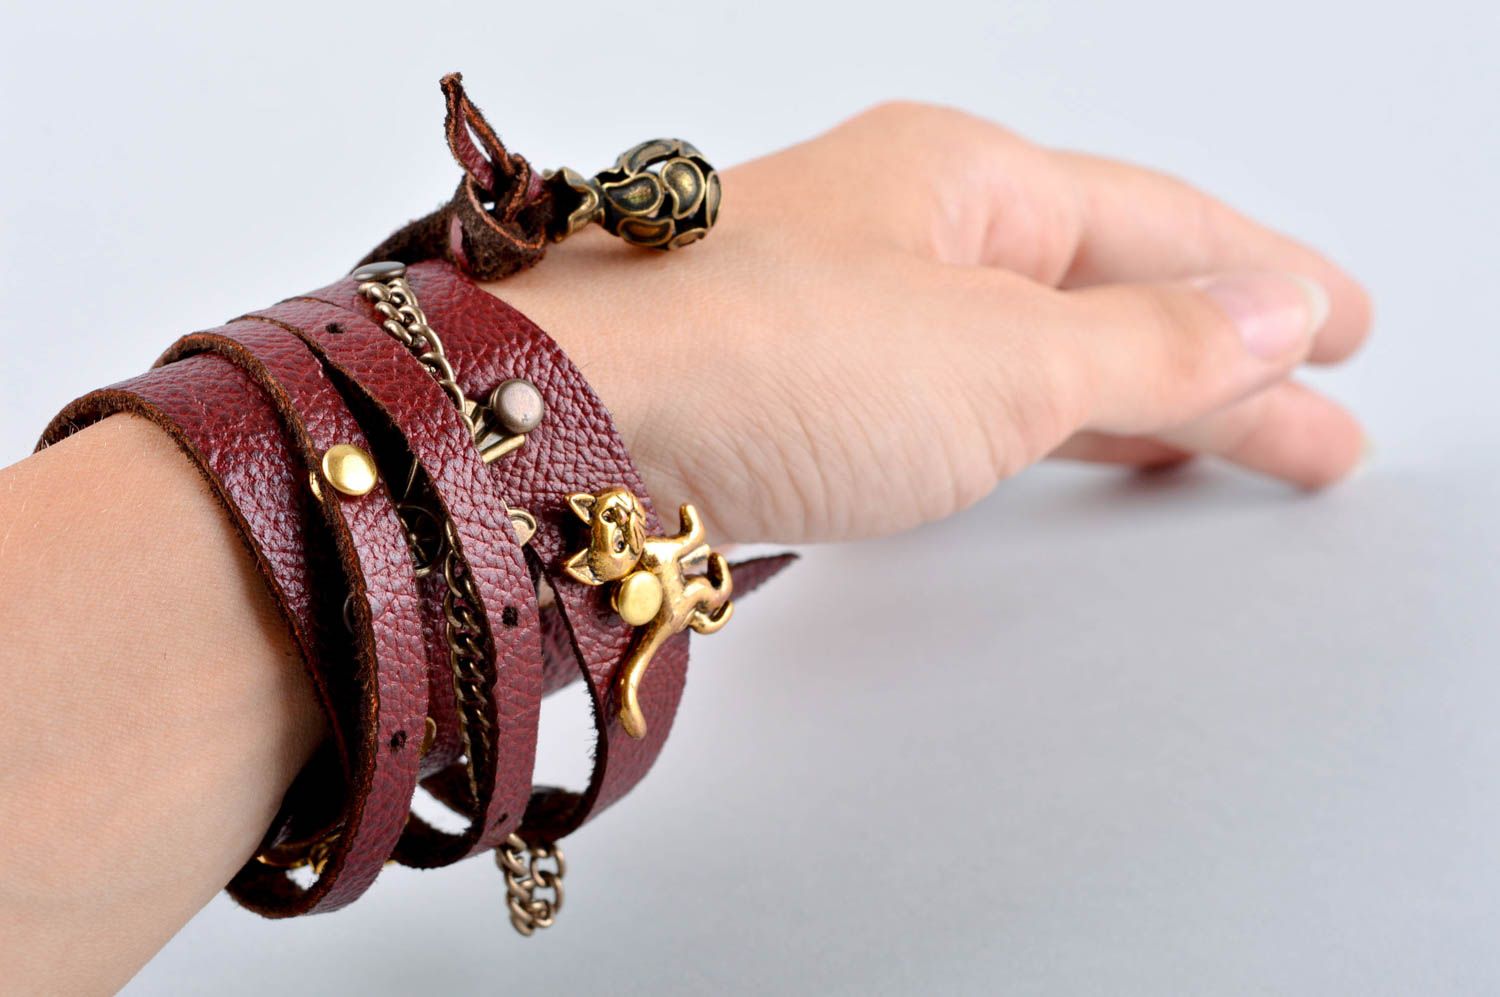 Unusual handmade leather bracelet cool jewelry wrist bracelet designs gift ideas photo 5